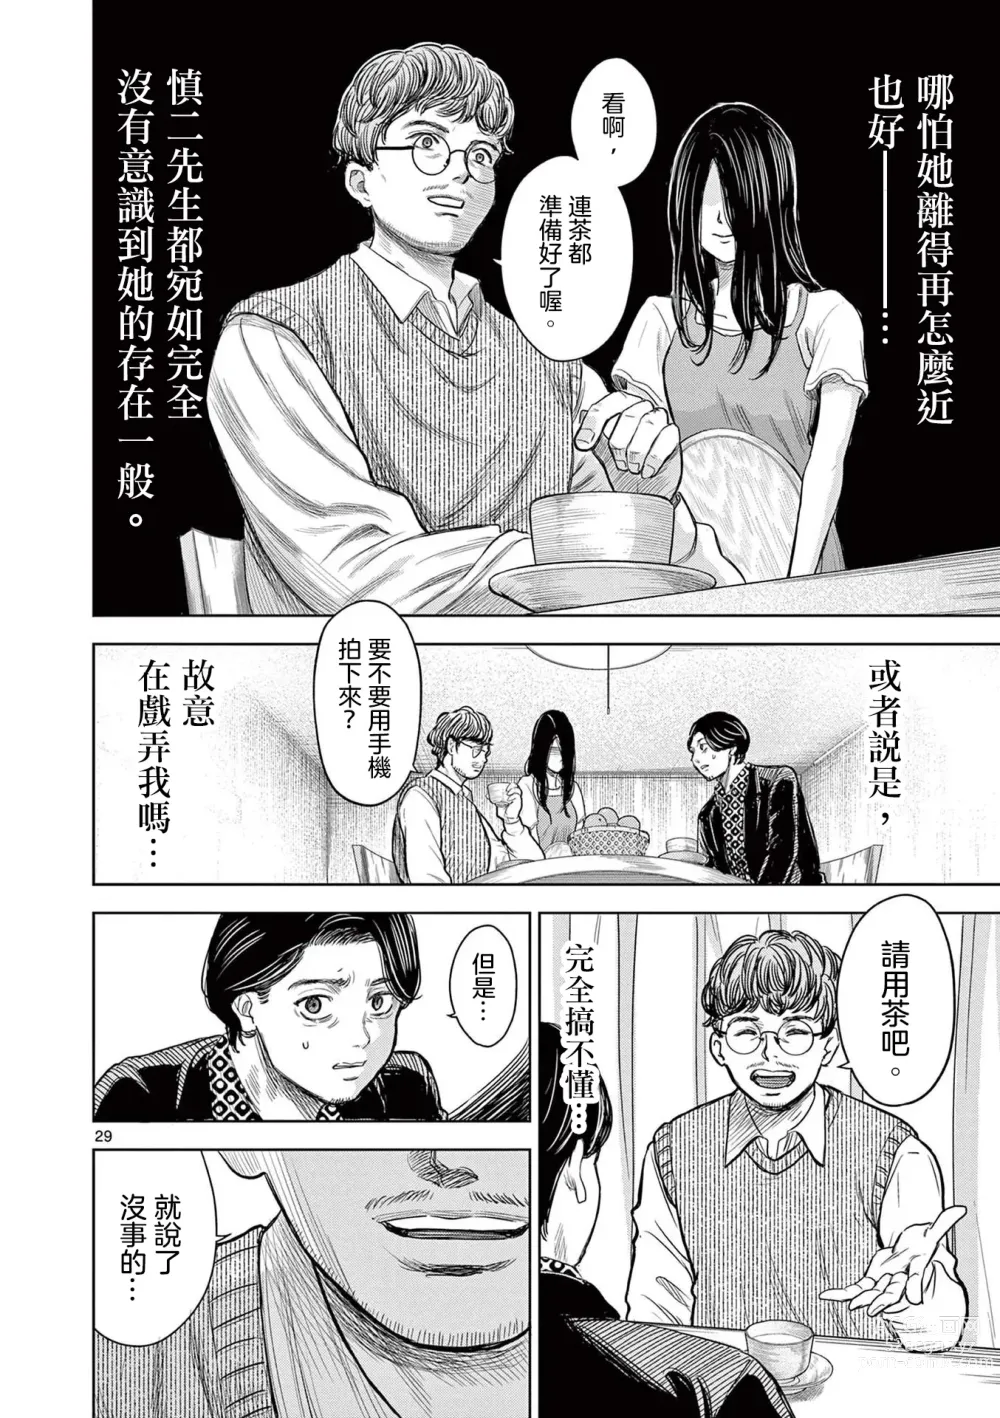 Page 35 of manga Iyadan Yobanashi Chinese]